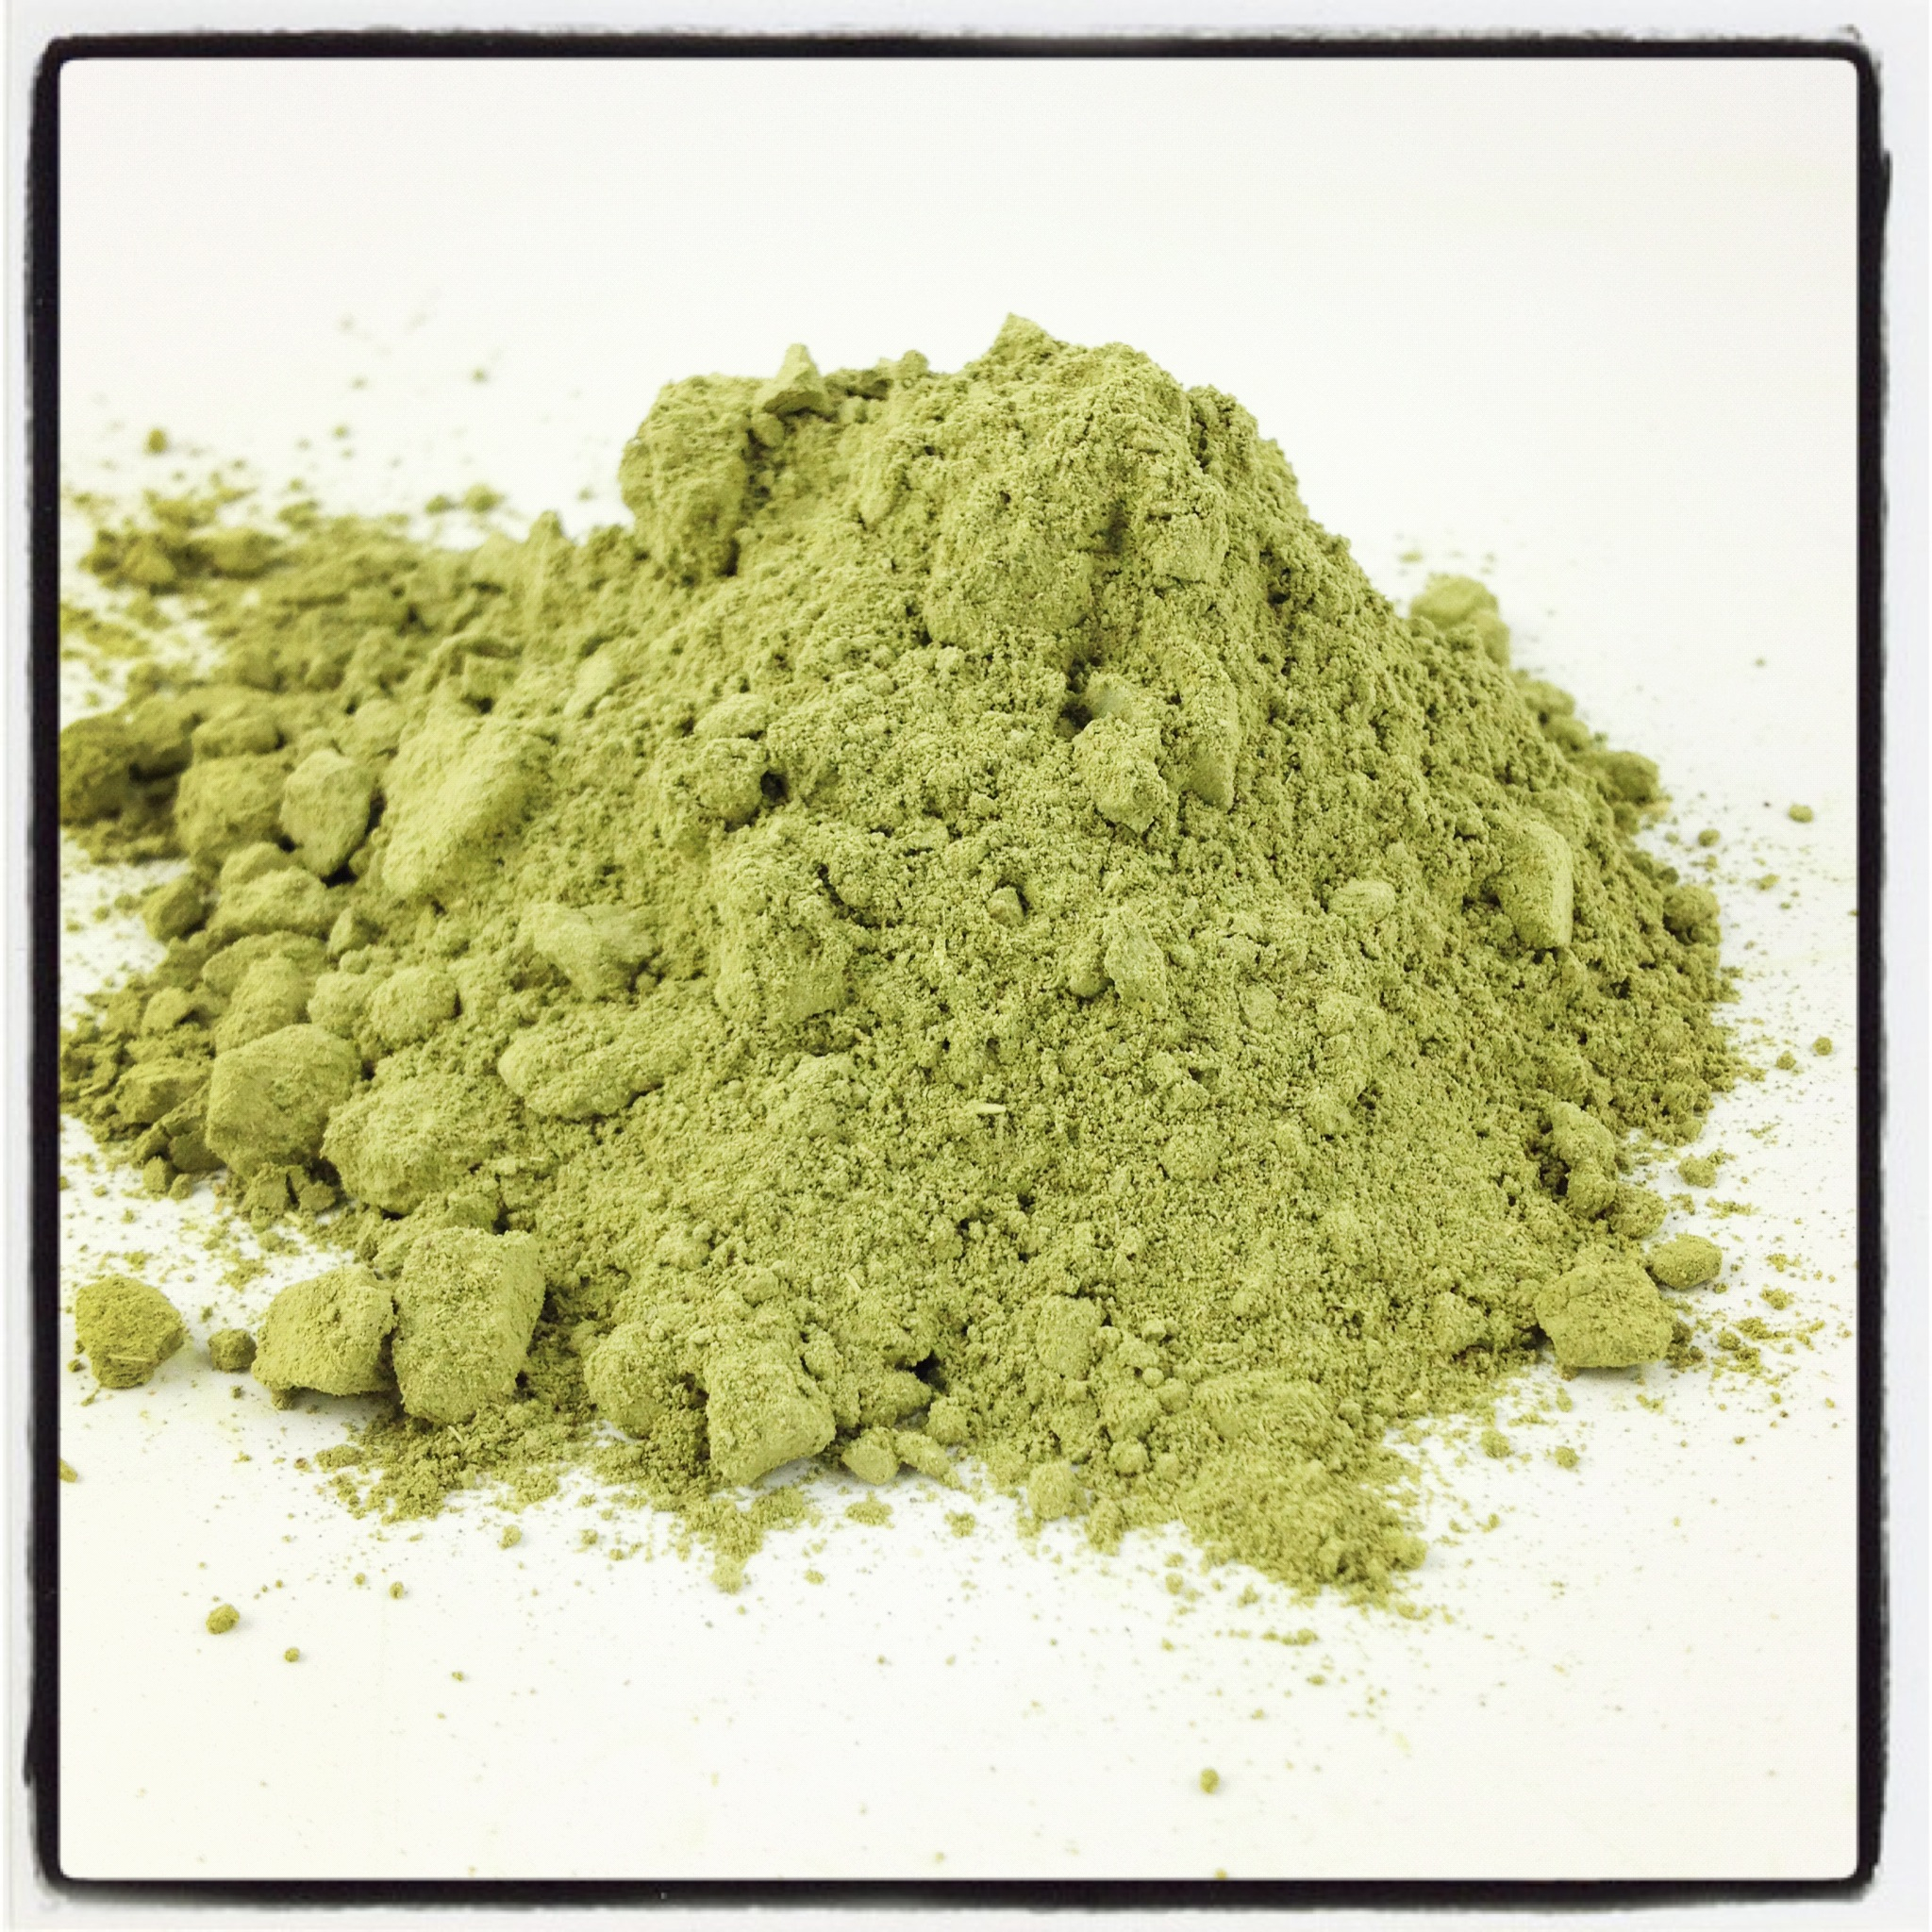 Organic neem powder